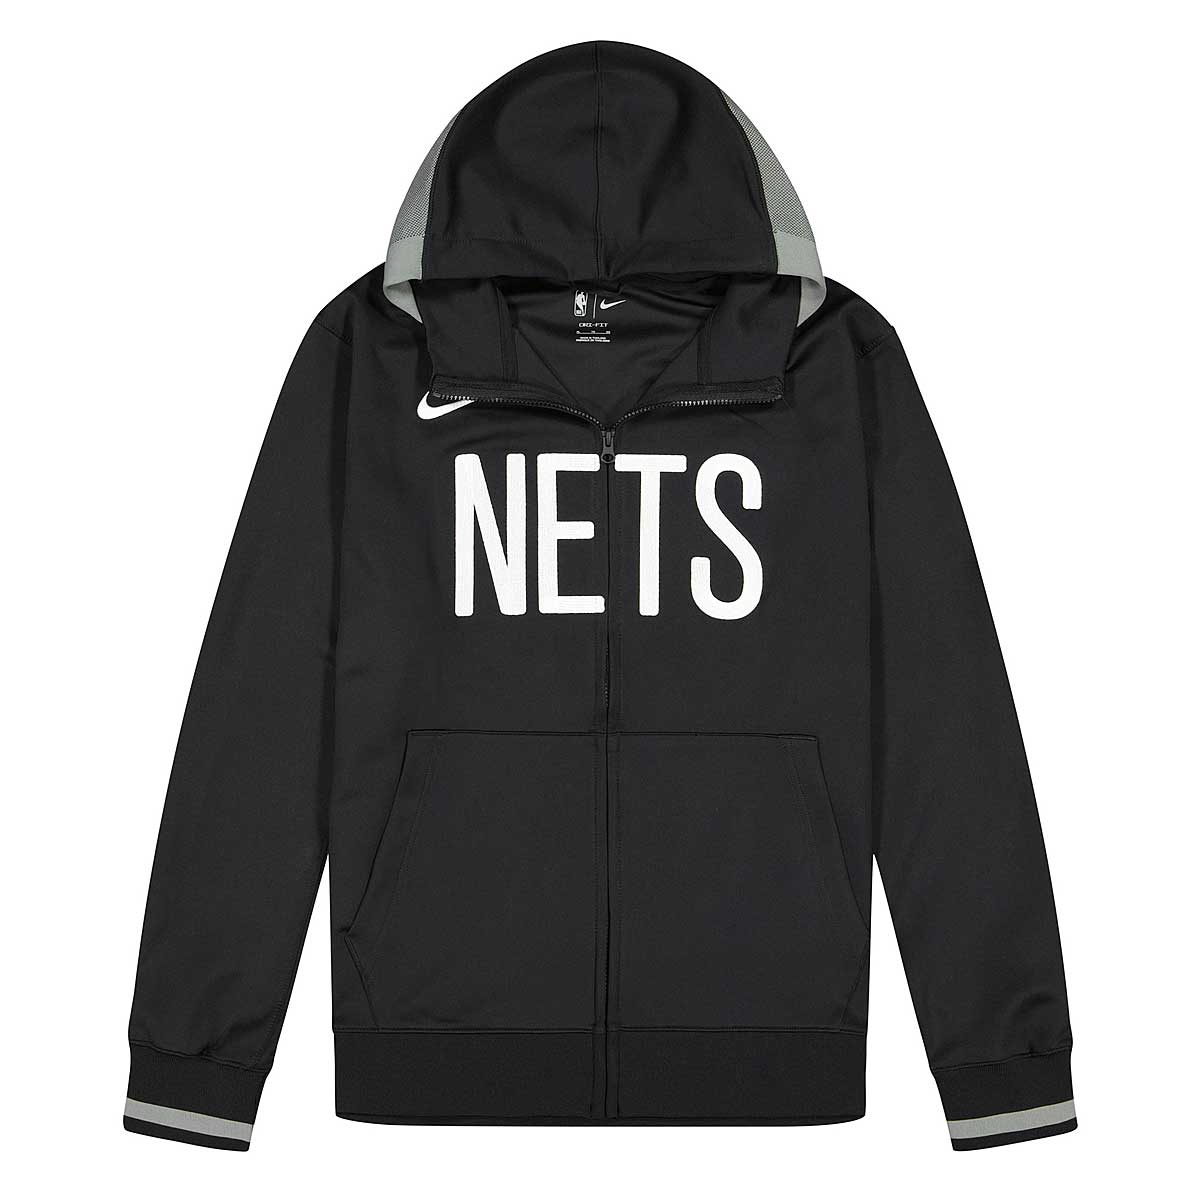 Image of Nike NBA Brooklyn Nets Dri-fit Showtime Full Zip Hoody Hoody, Black/dark Steel Grey/black/white